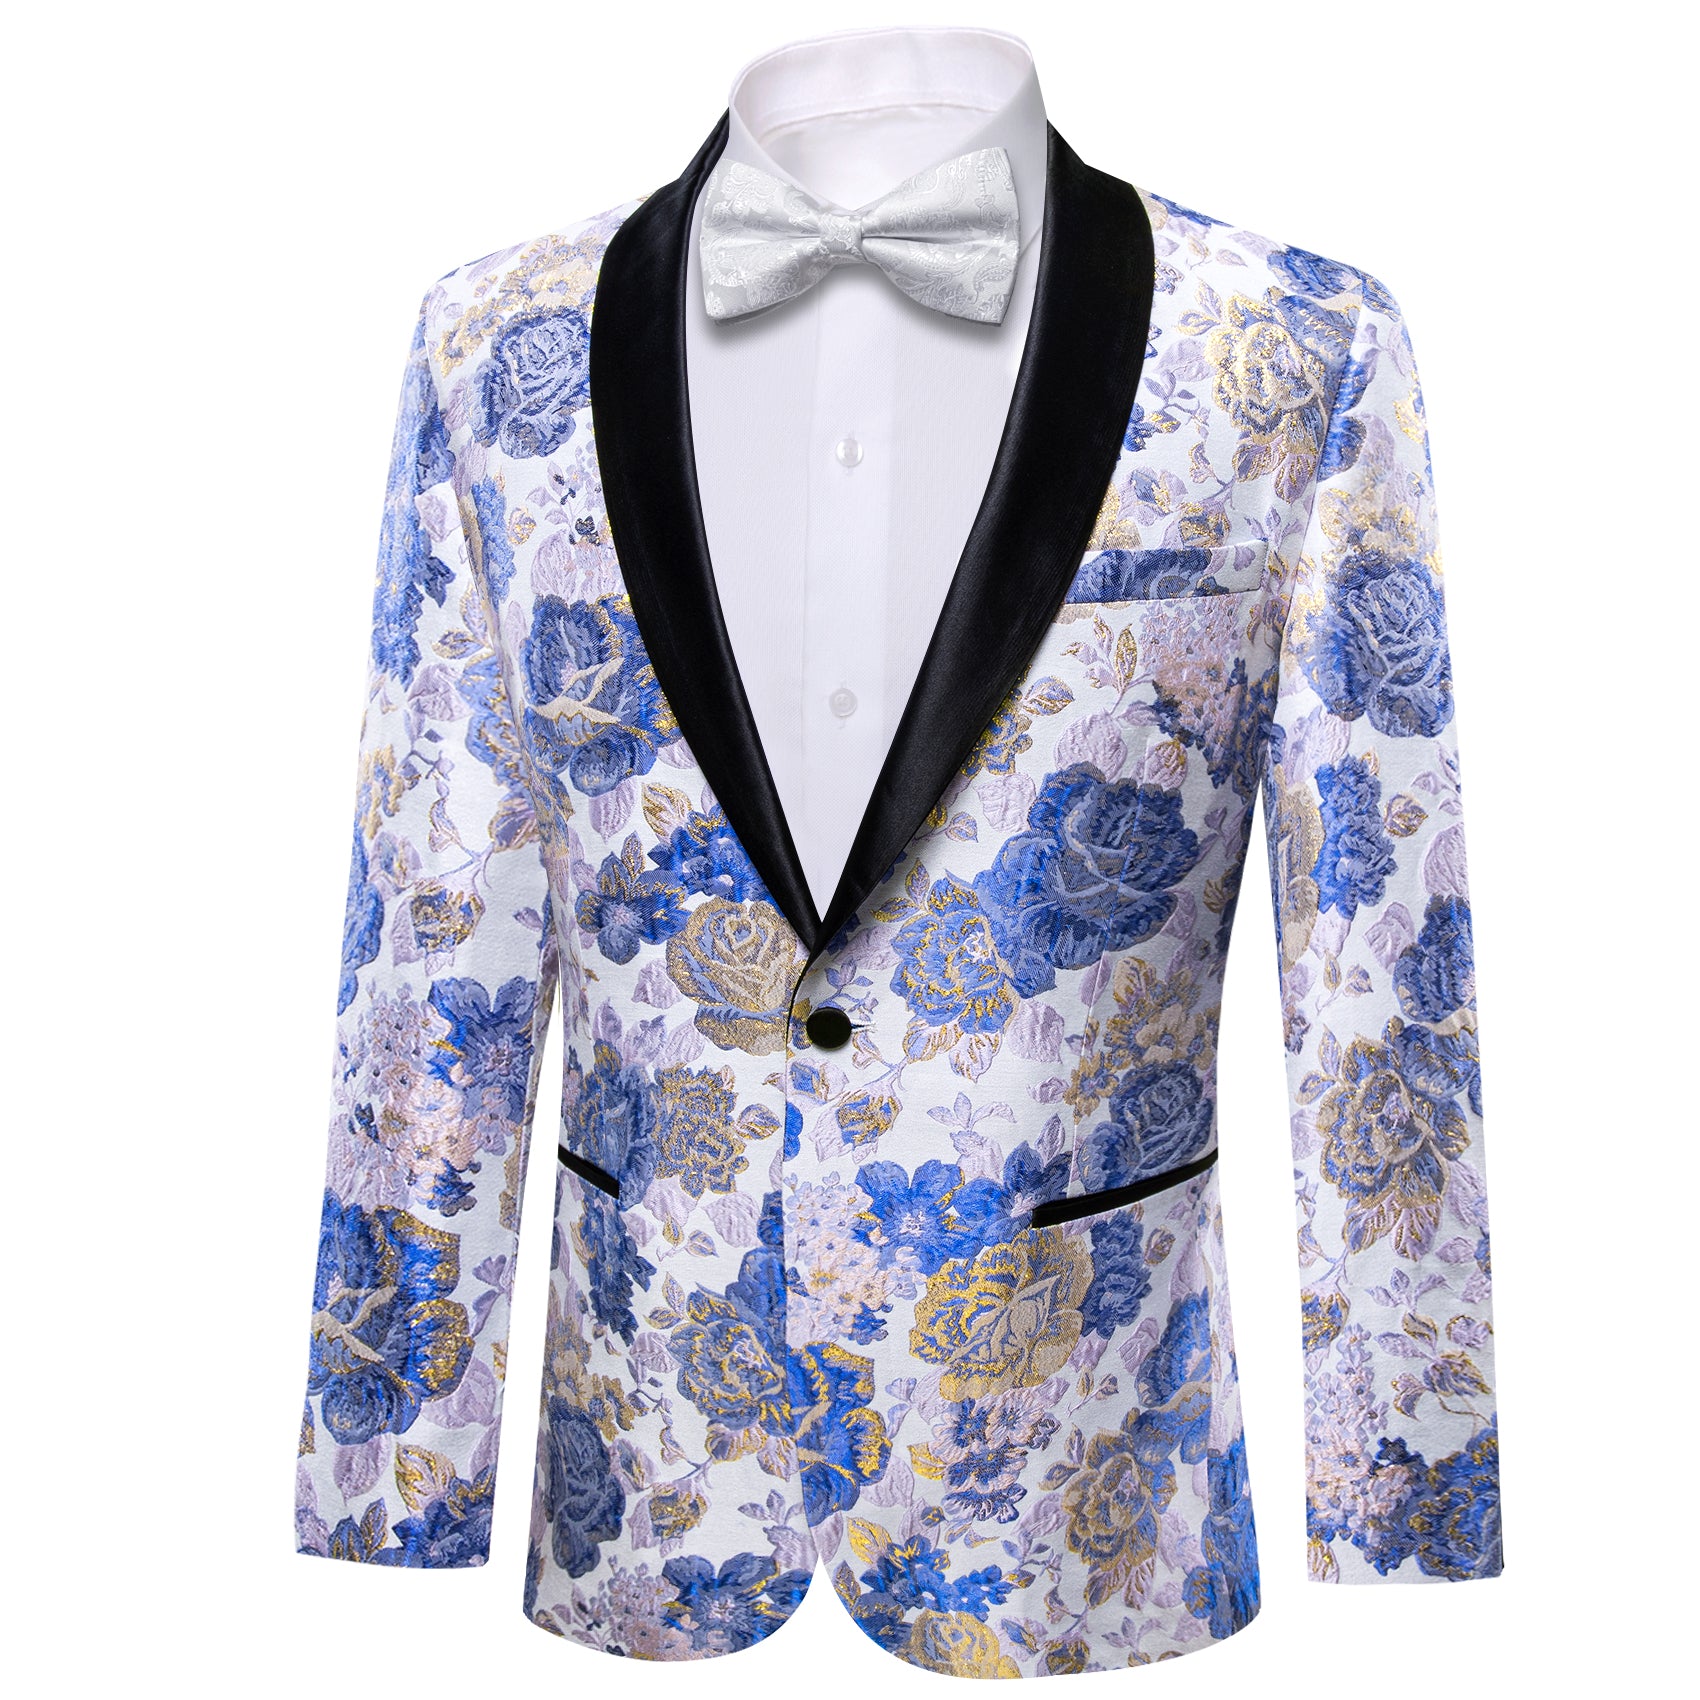 Men's Dress Party Blue White Flower Suit Jacket Slim One Button Stylish Blazer